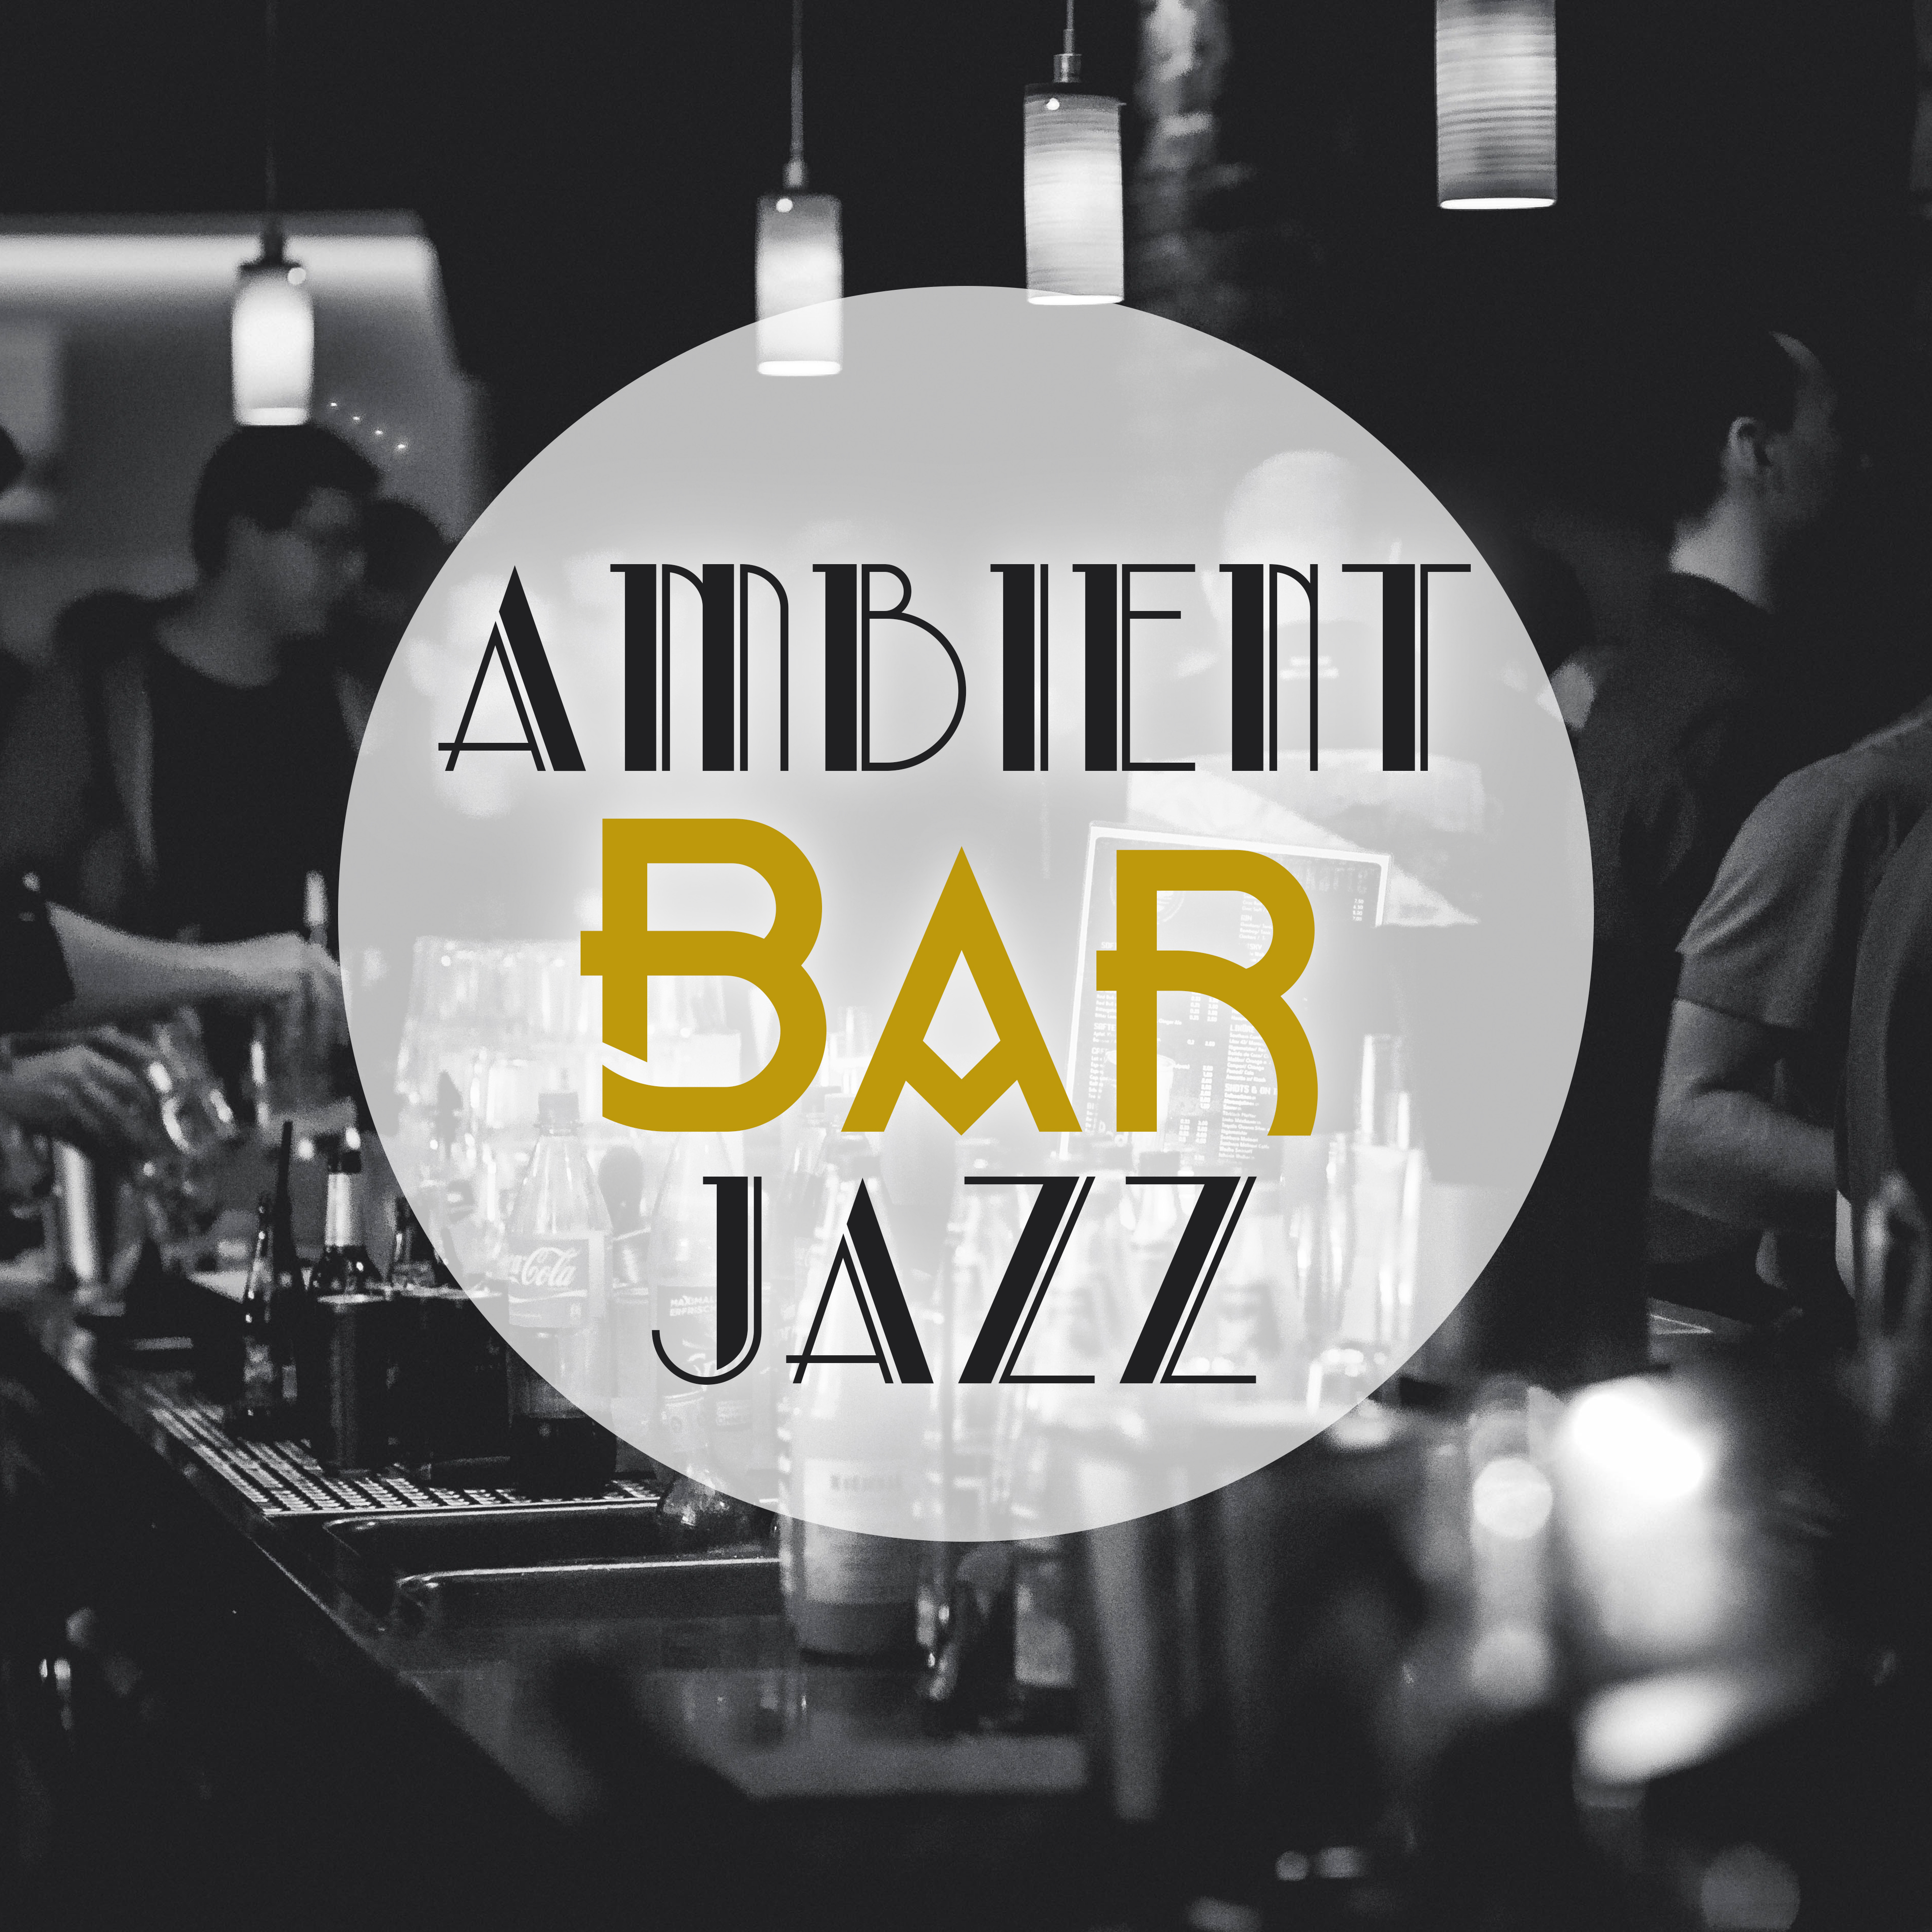 Ambient Bar Jazz